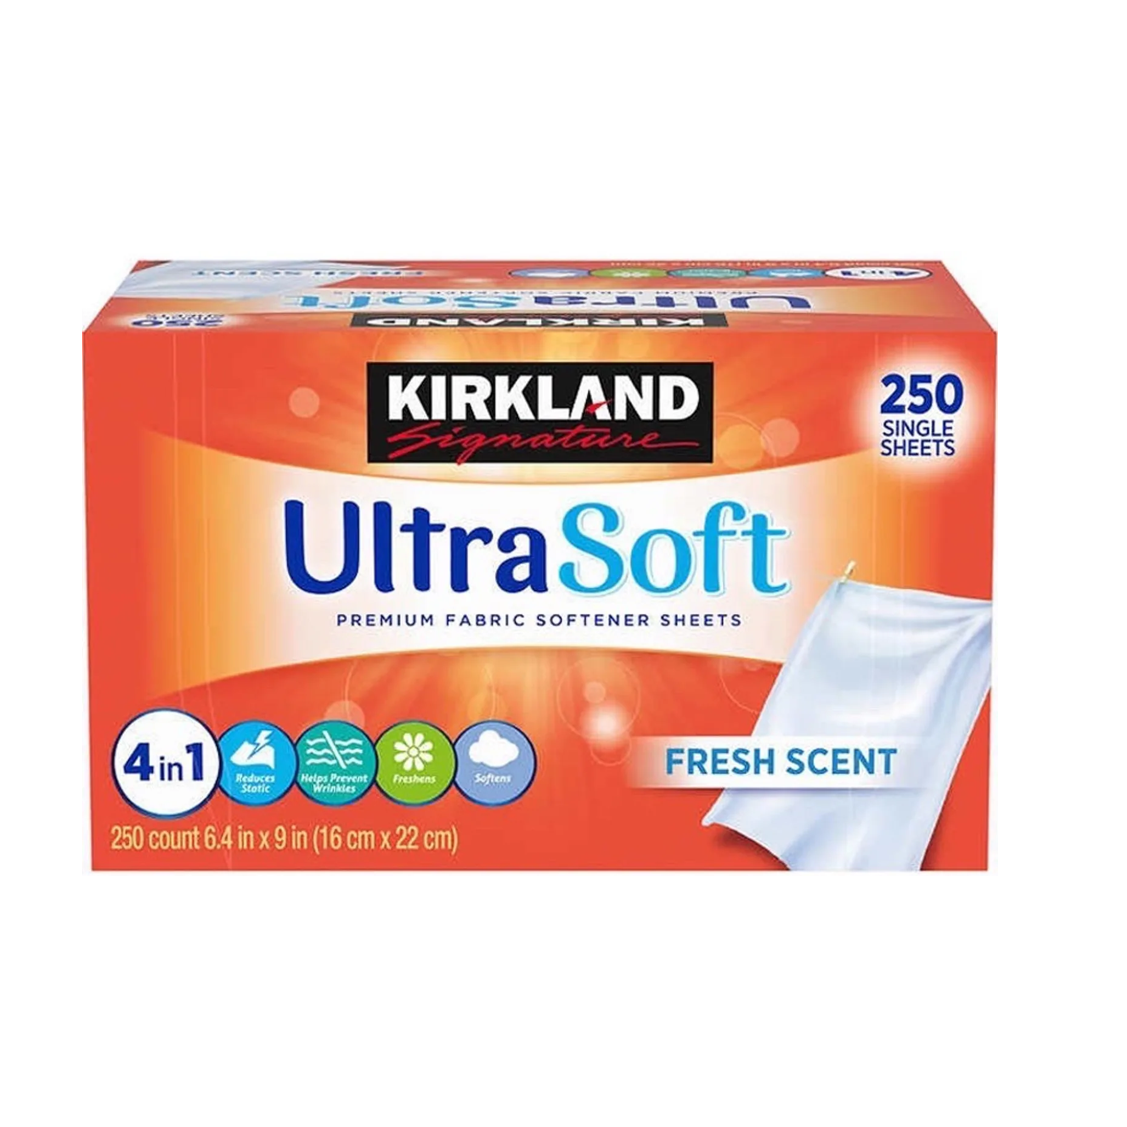 Giấy thơm quần áo Kirkland Signature Fabric Softener Sheets Ultra Soft